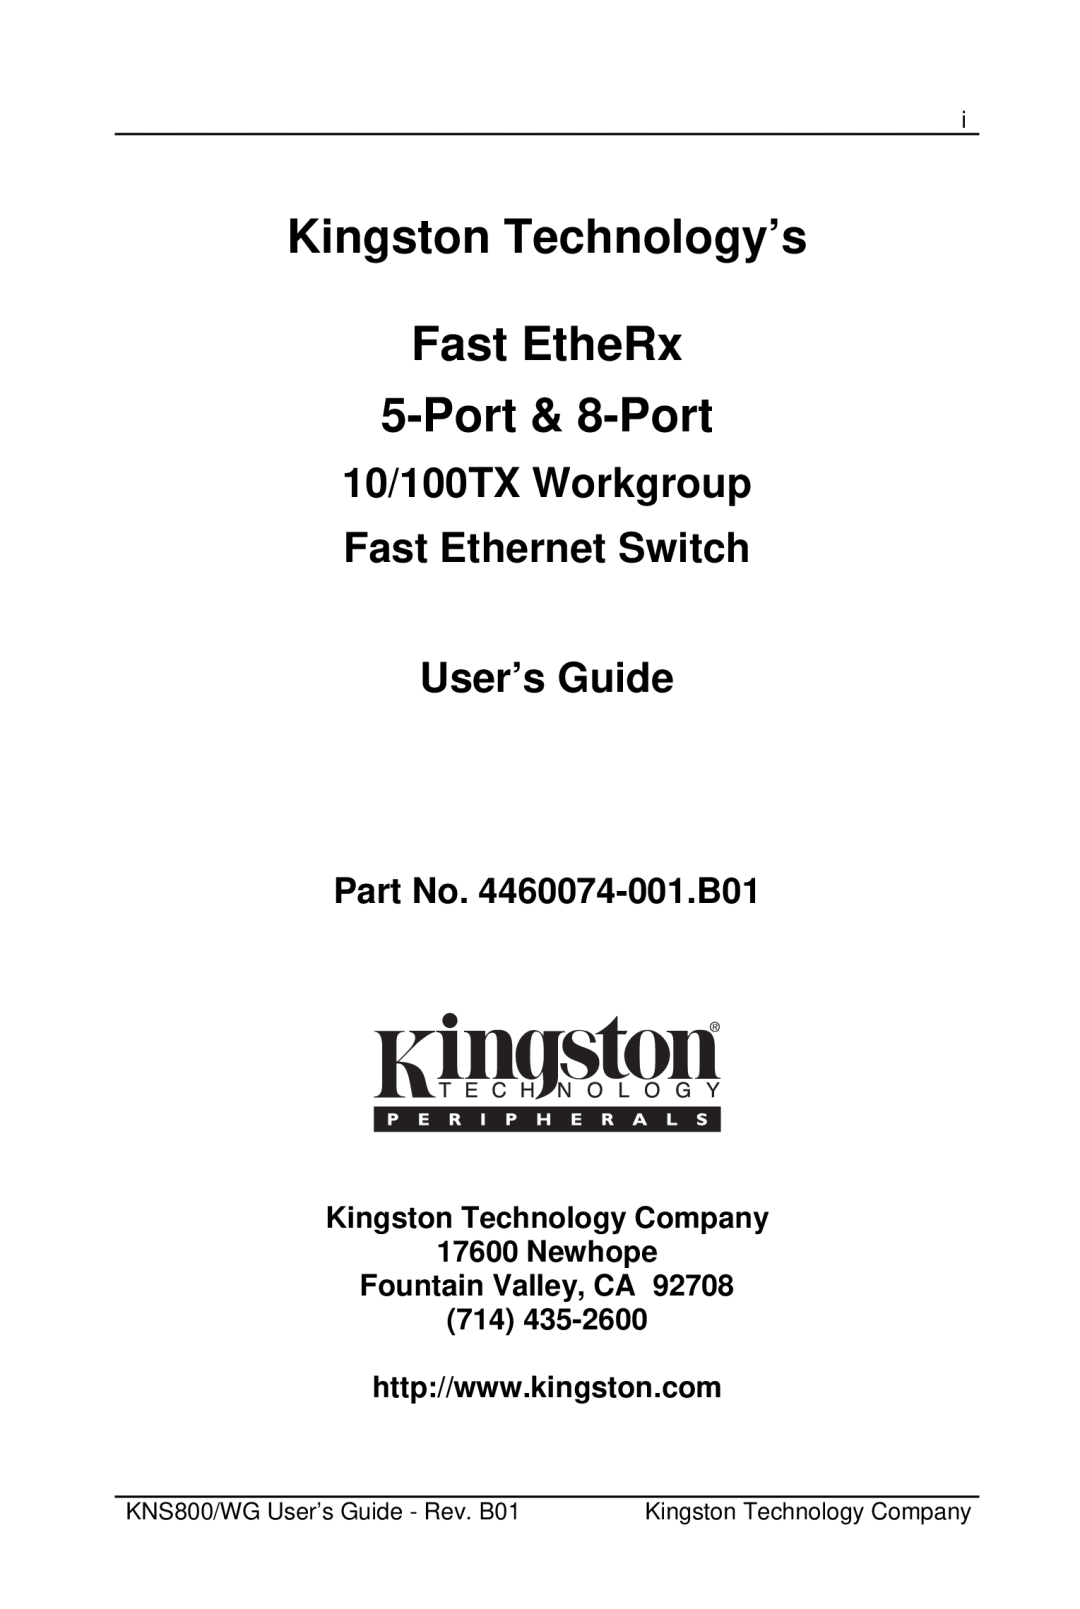 Kingston Technology KNS800/WG, KNS500/WG manual Kingston Technology’s Fast EtheRx 5-Port & 8-Port, Part No. 4460074-001.B01 